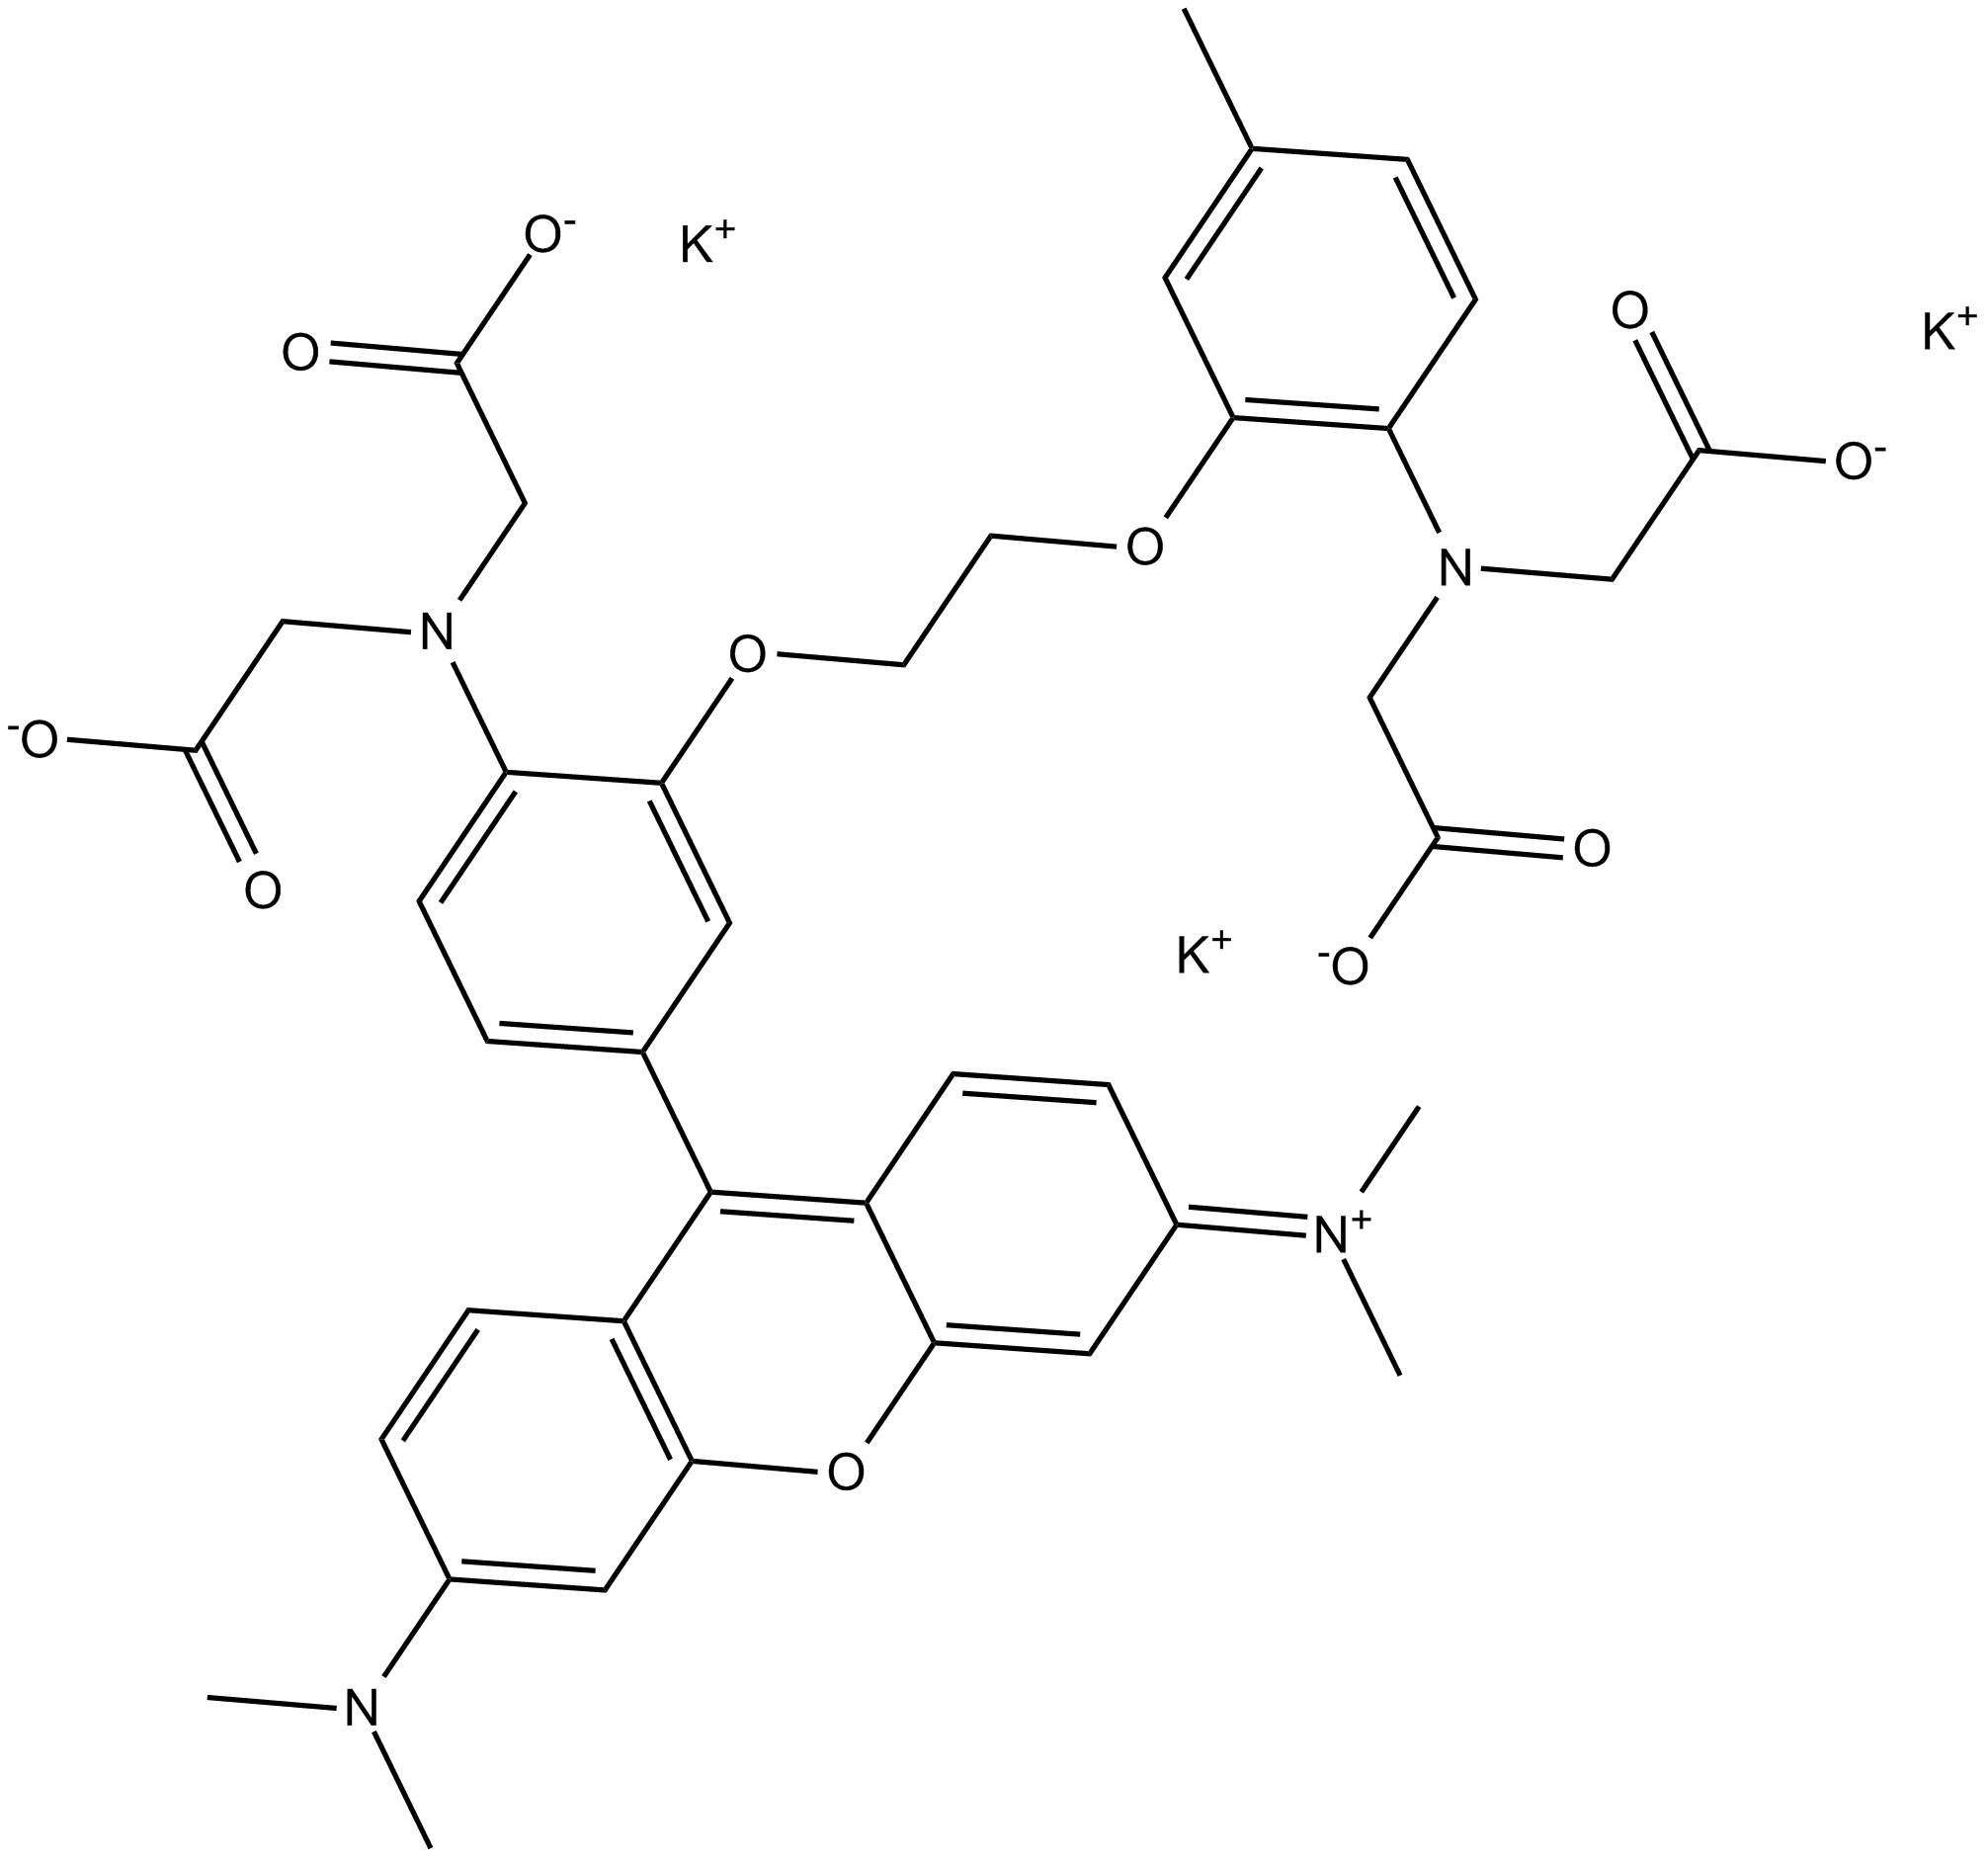 Rhod-2 (potassium salt)